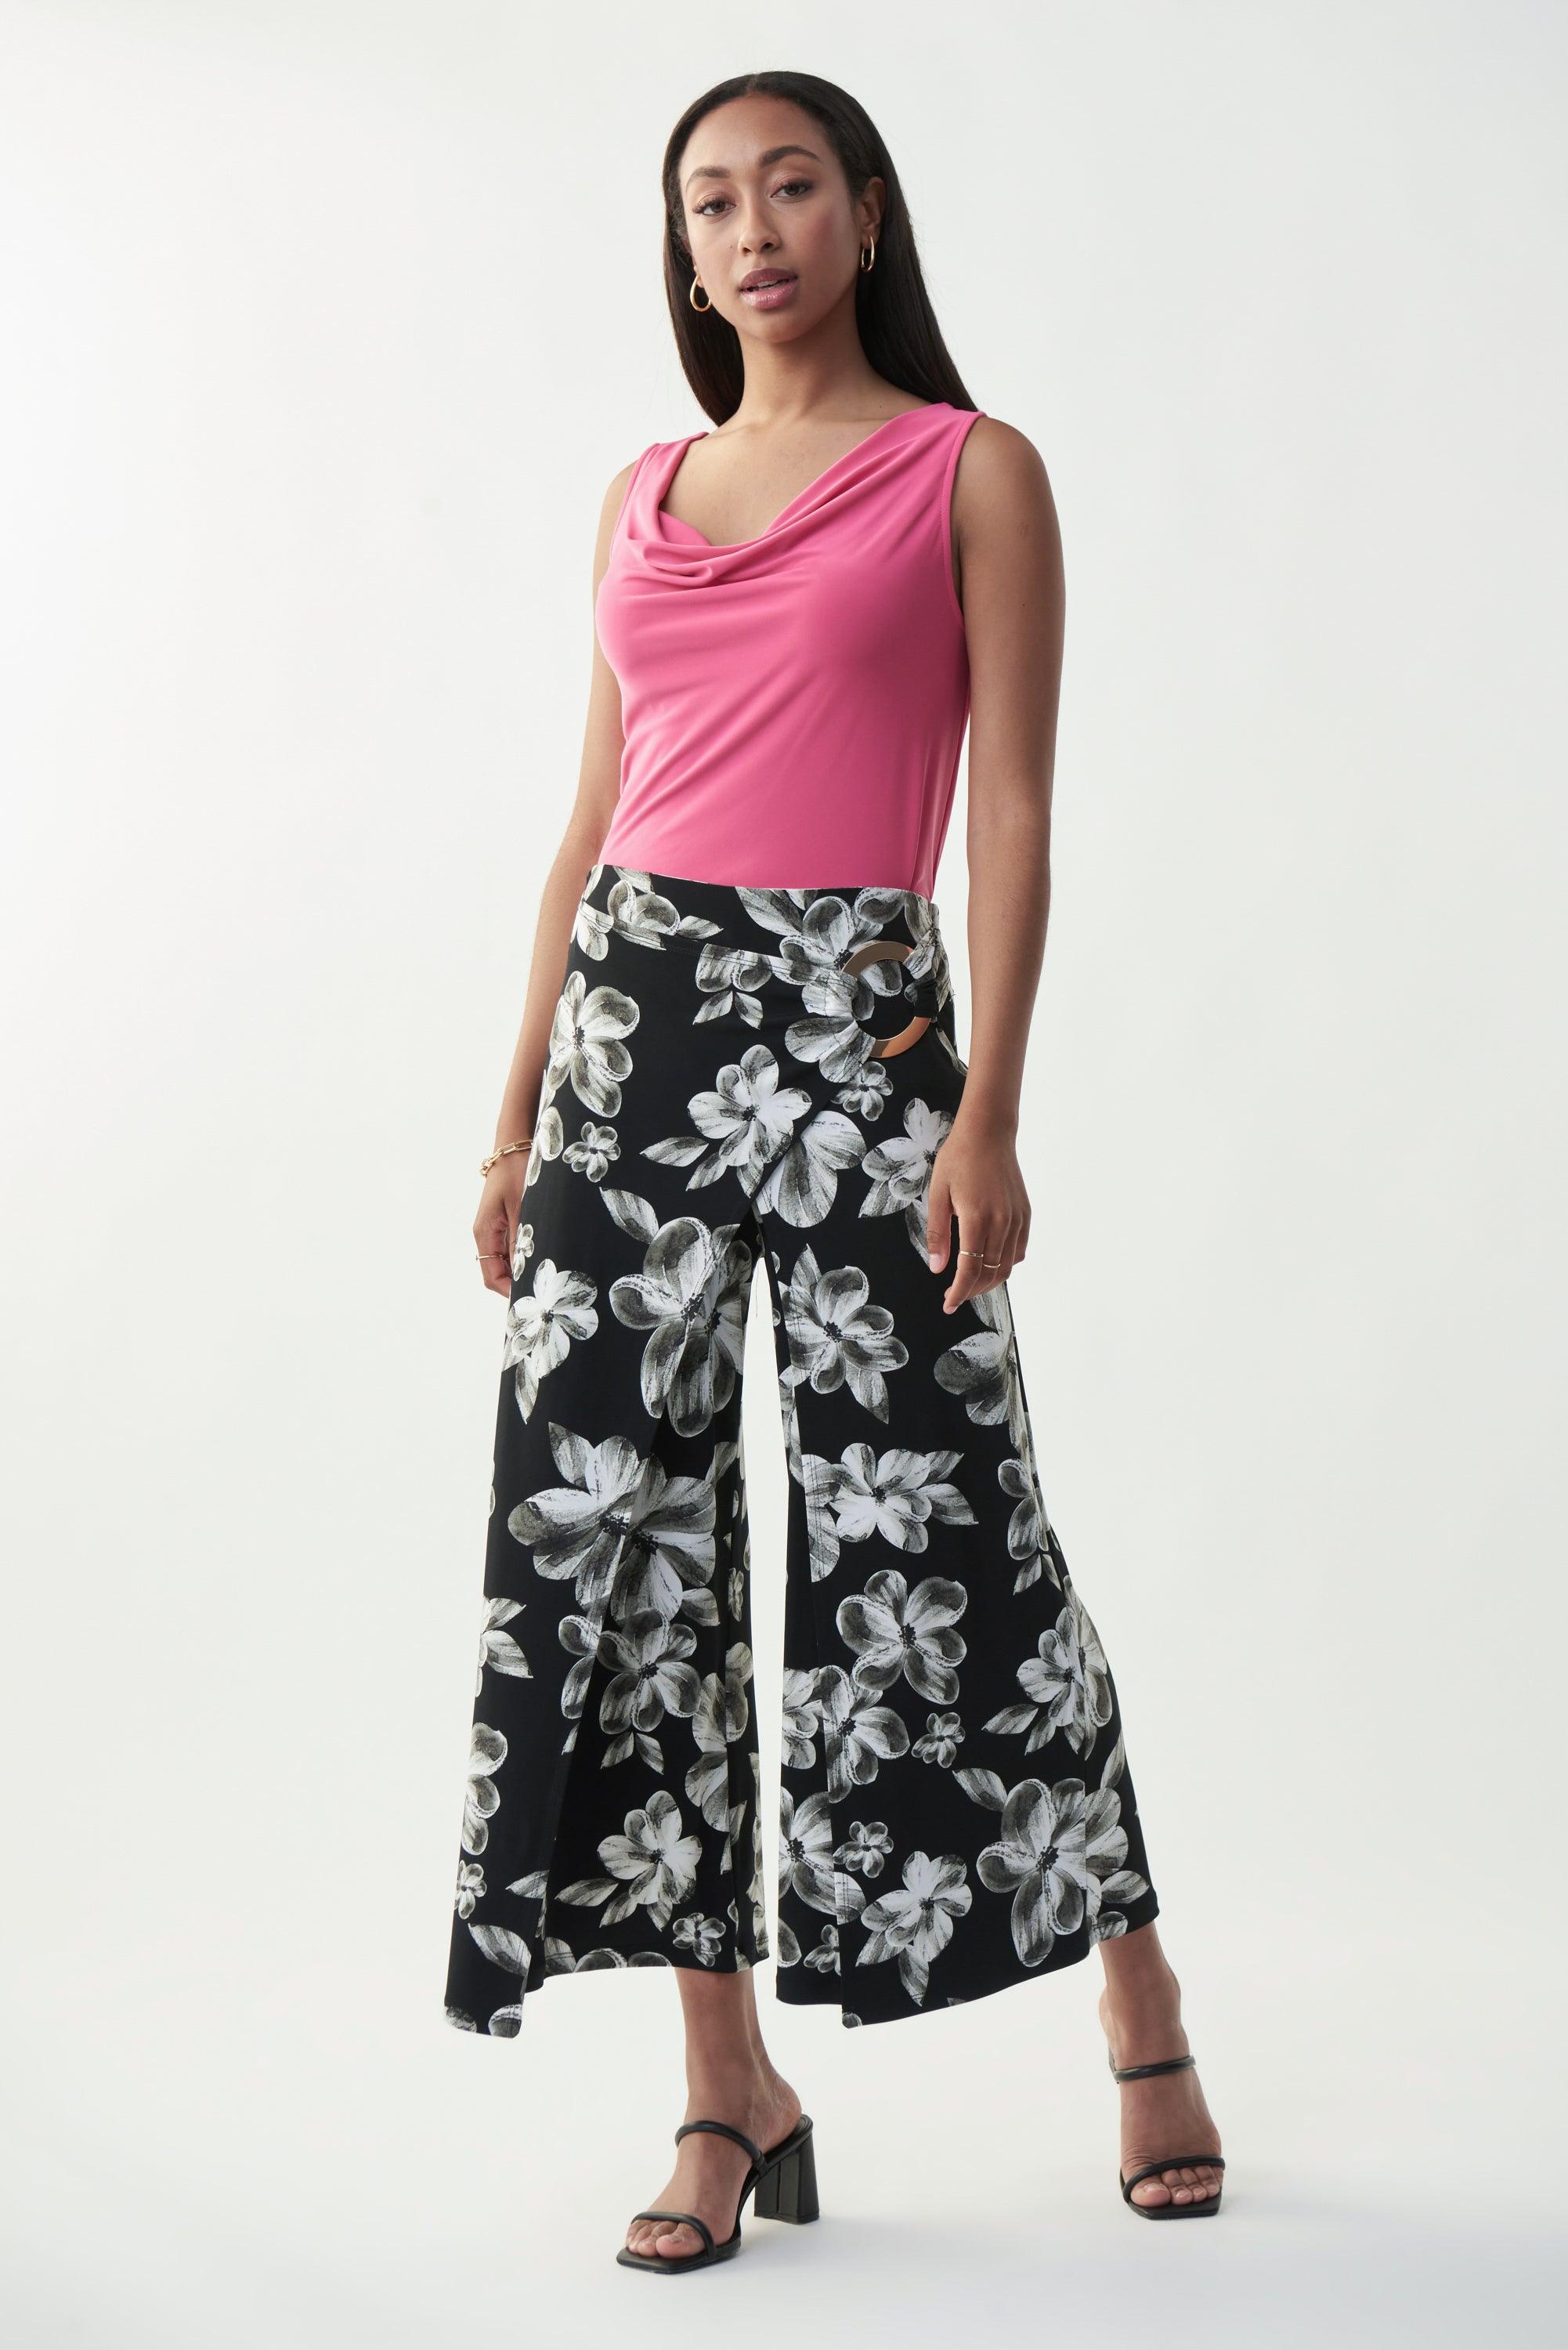 Bloes Rood Ribkoff 221079/3844 ) - Delaere Womenswear